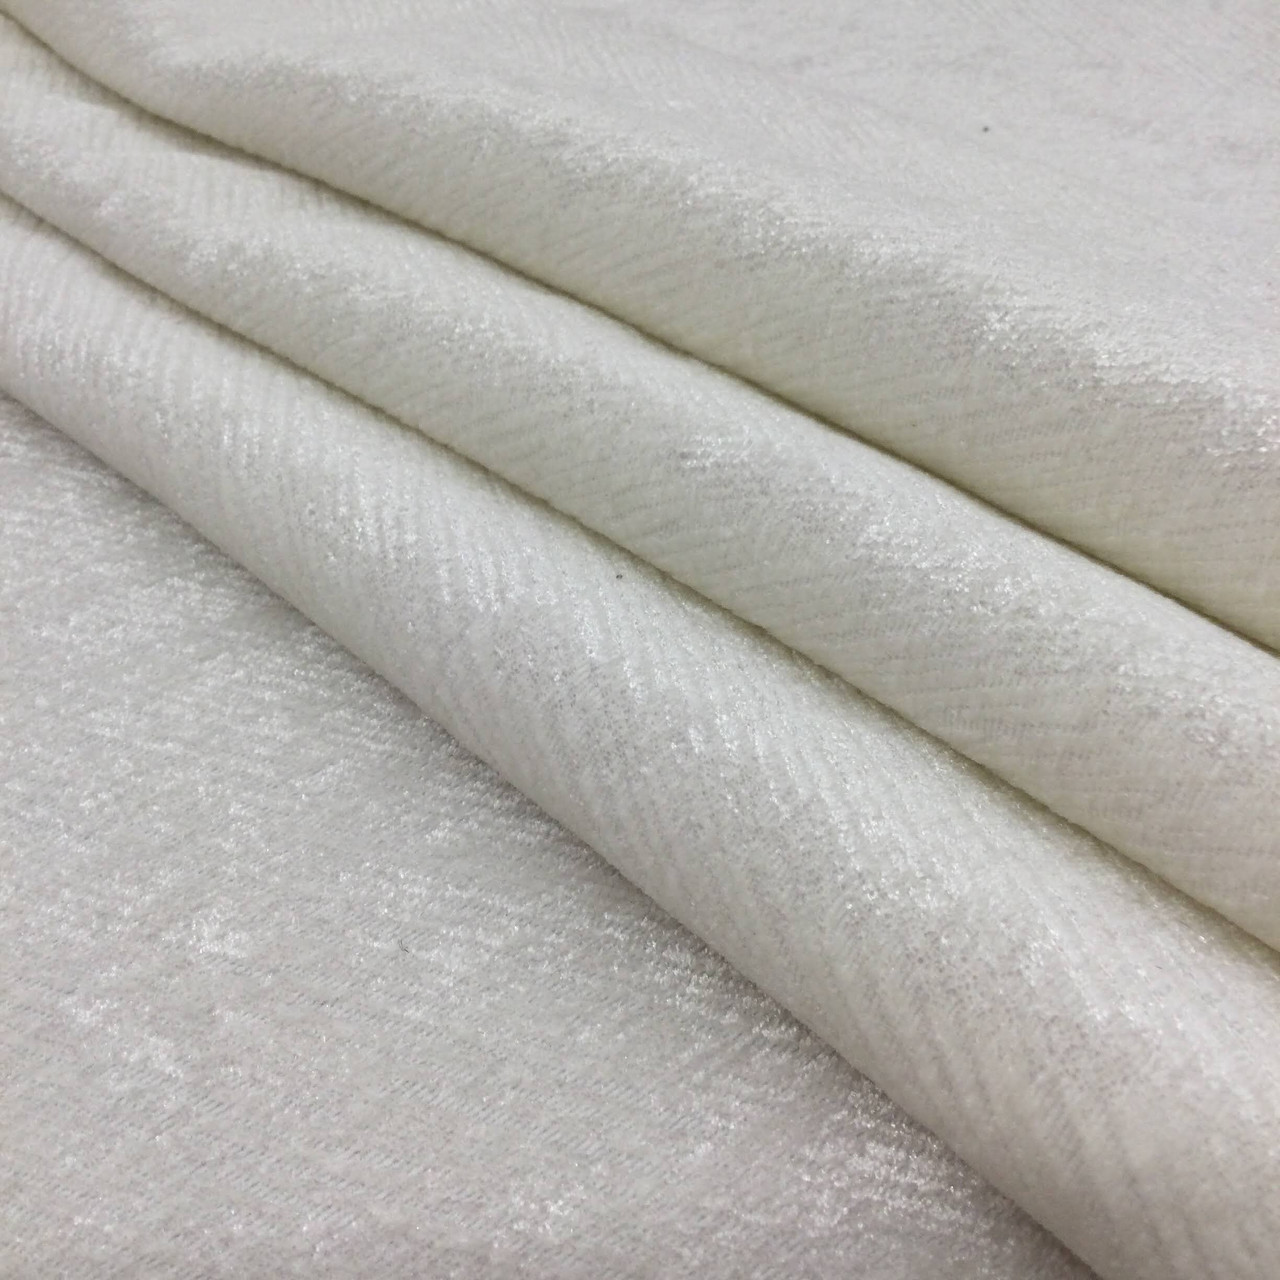 Herringbone Chenille Fabric in White | Upholstery | Medium to Heavy Weight  | 54 Wide | By the Yard